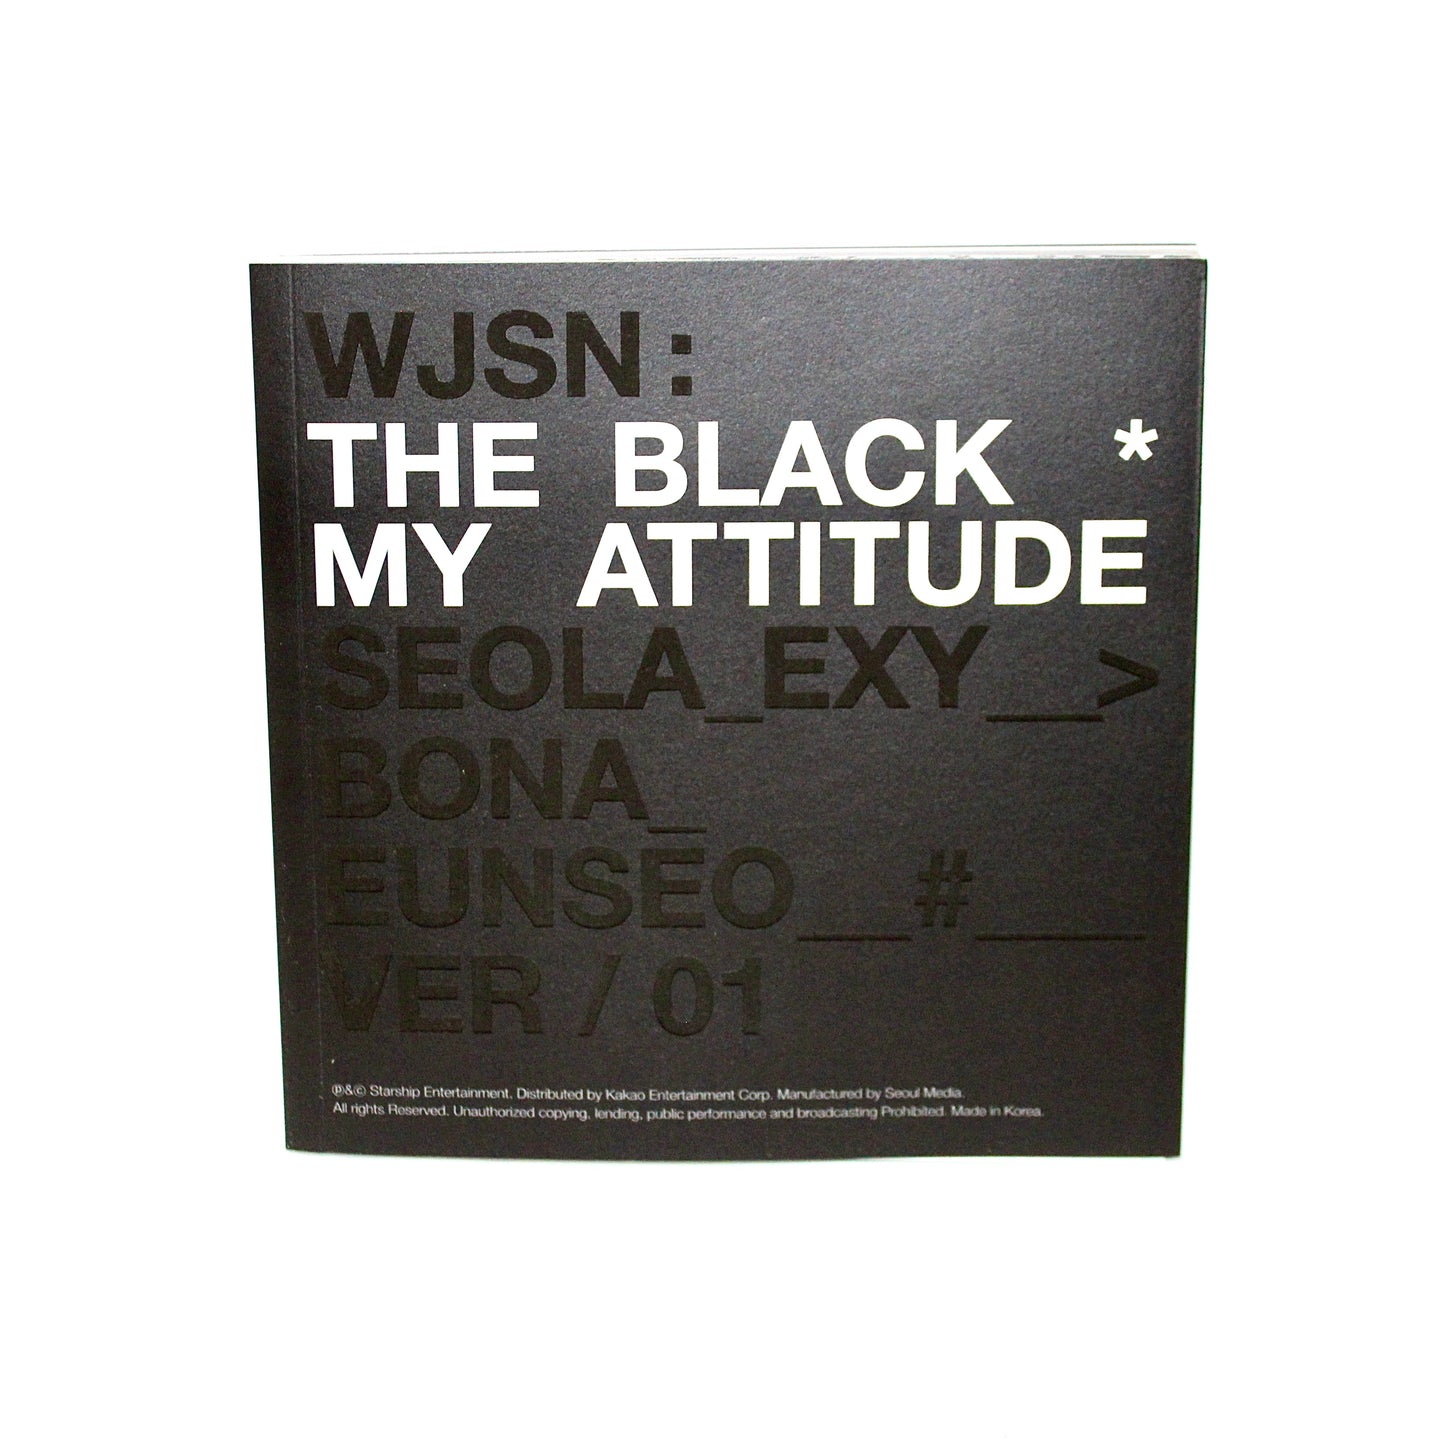 WJSN THE BLACK 1st Single Album: My Attitude | VER / 01